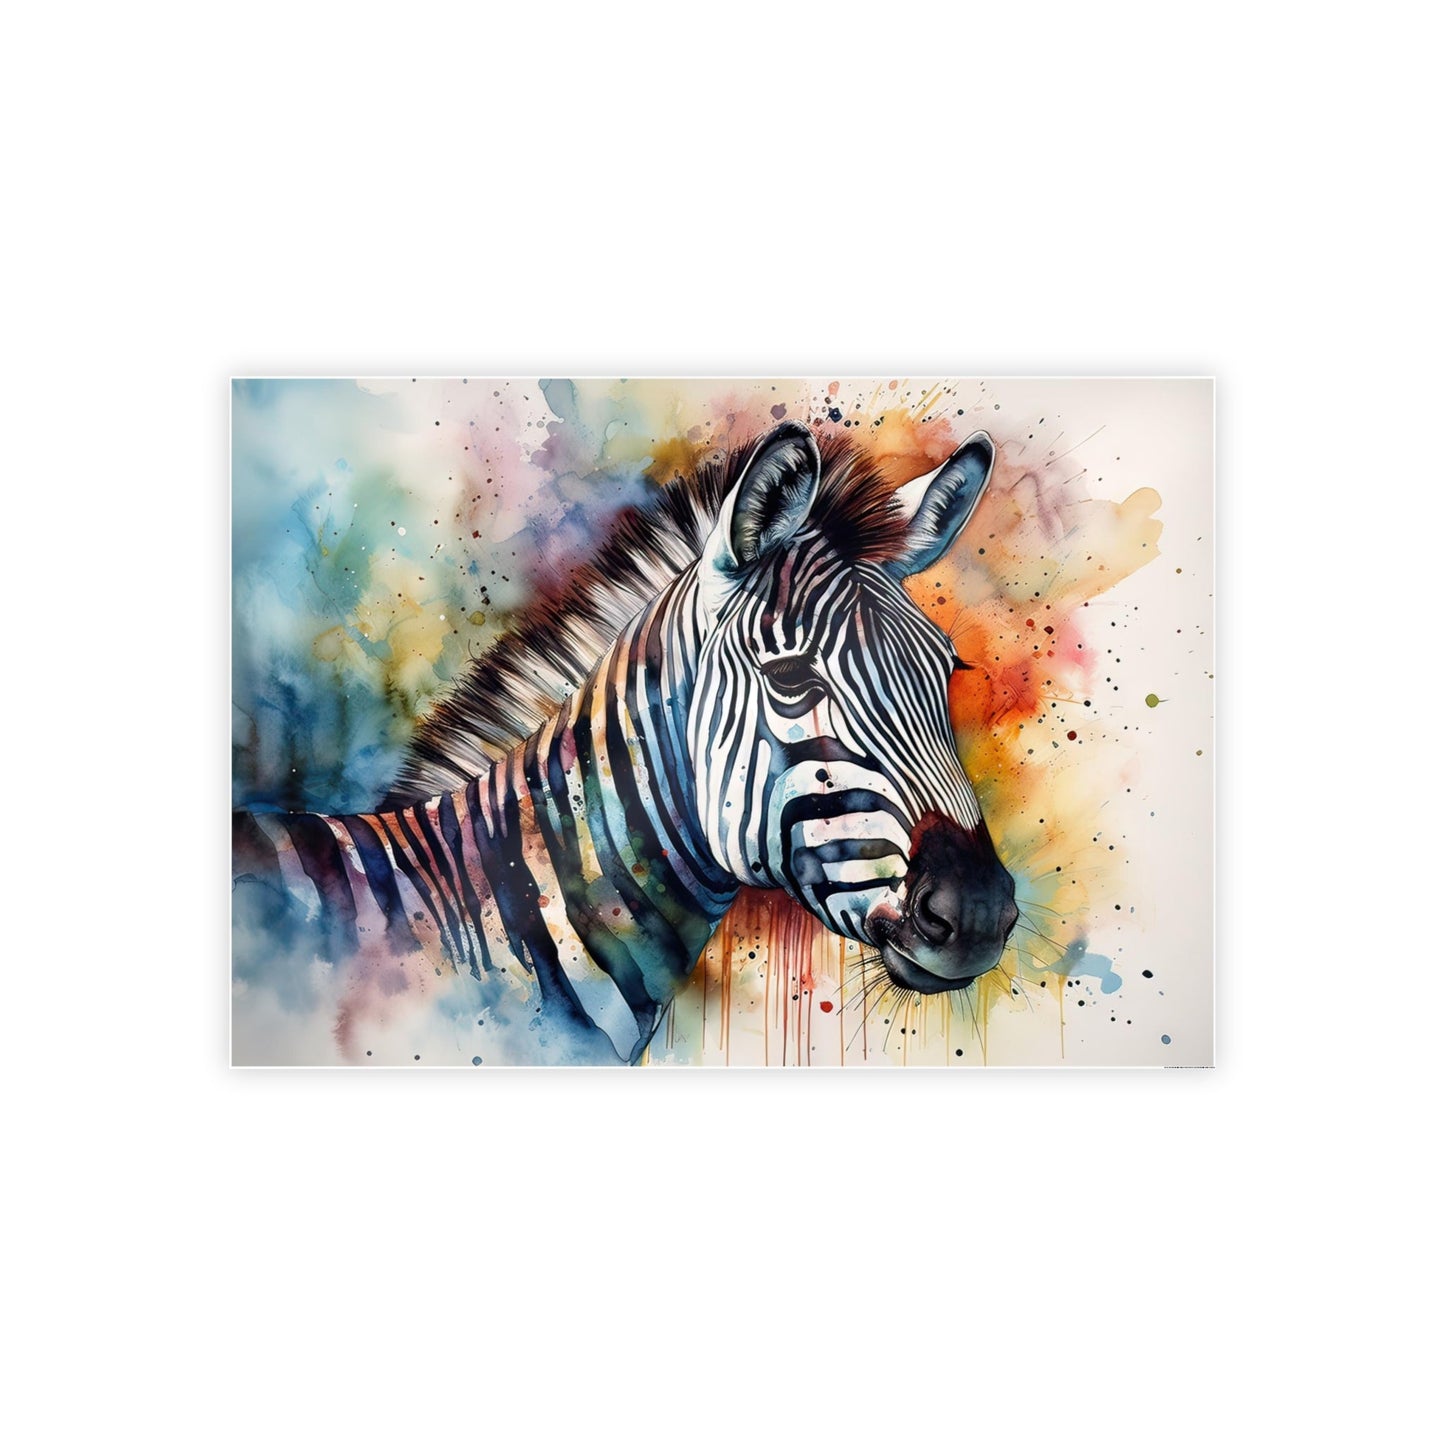 Striking Stripes: Zebra Canvas & Poster Print on a Large Canvas